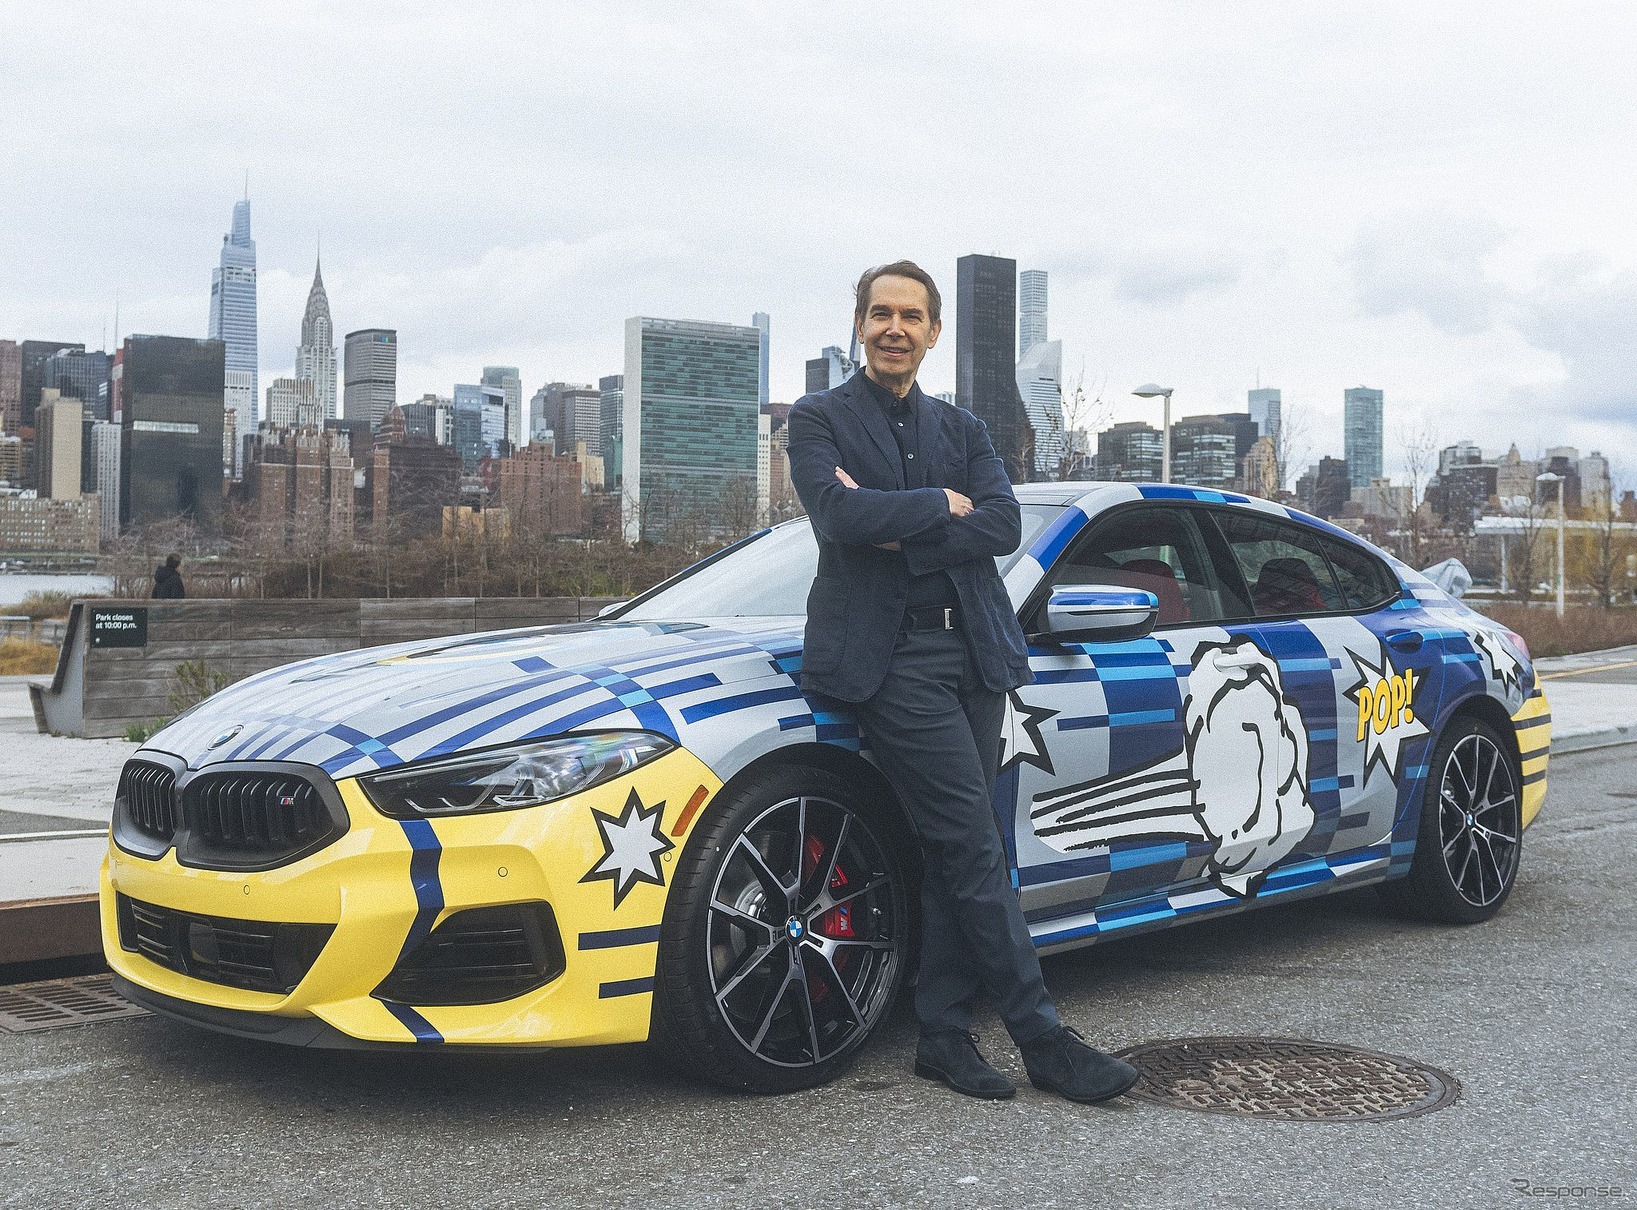 BMW「THE 8 X JEFF KOONS」とアーティストのジェフ・クーンズ氏